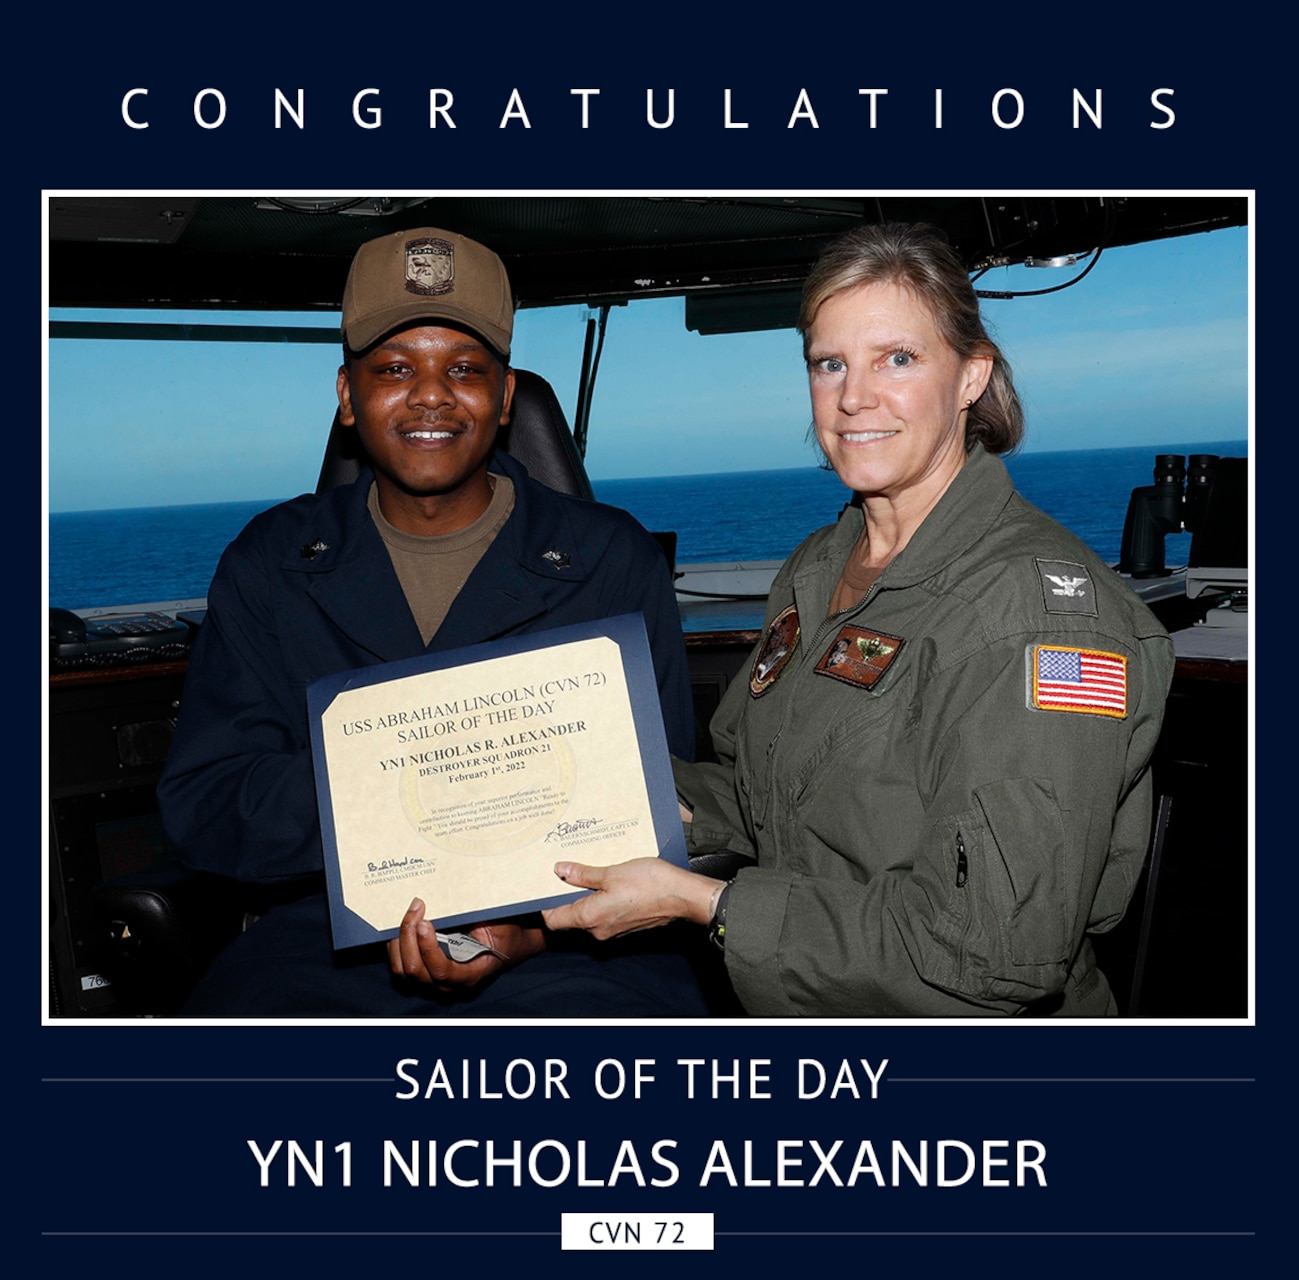 DESRON 21 Sailor YN1 Alexander Wins Sailor of the Day on USS ABRAHAM LINCOLN